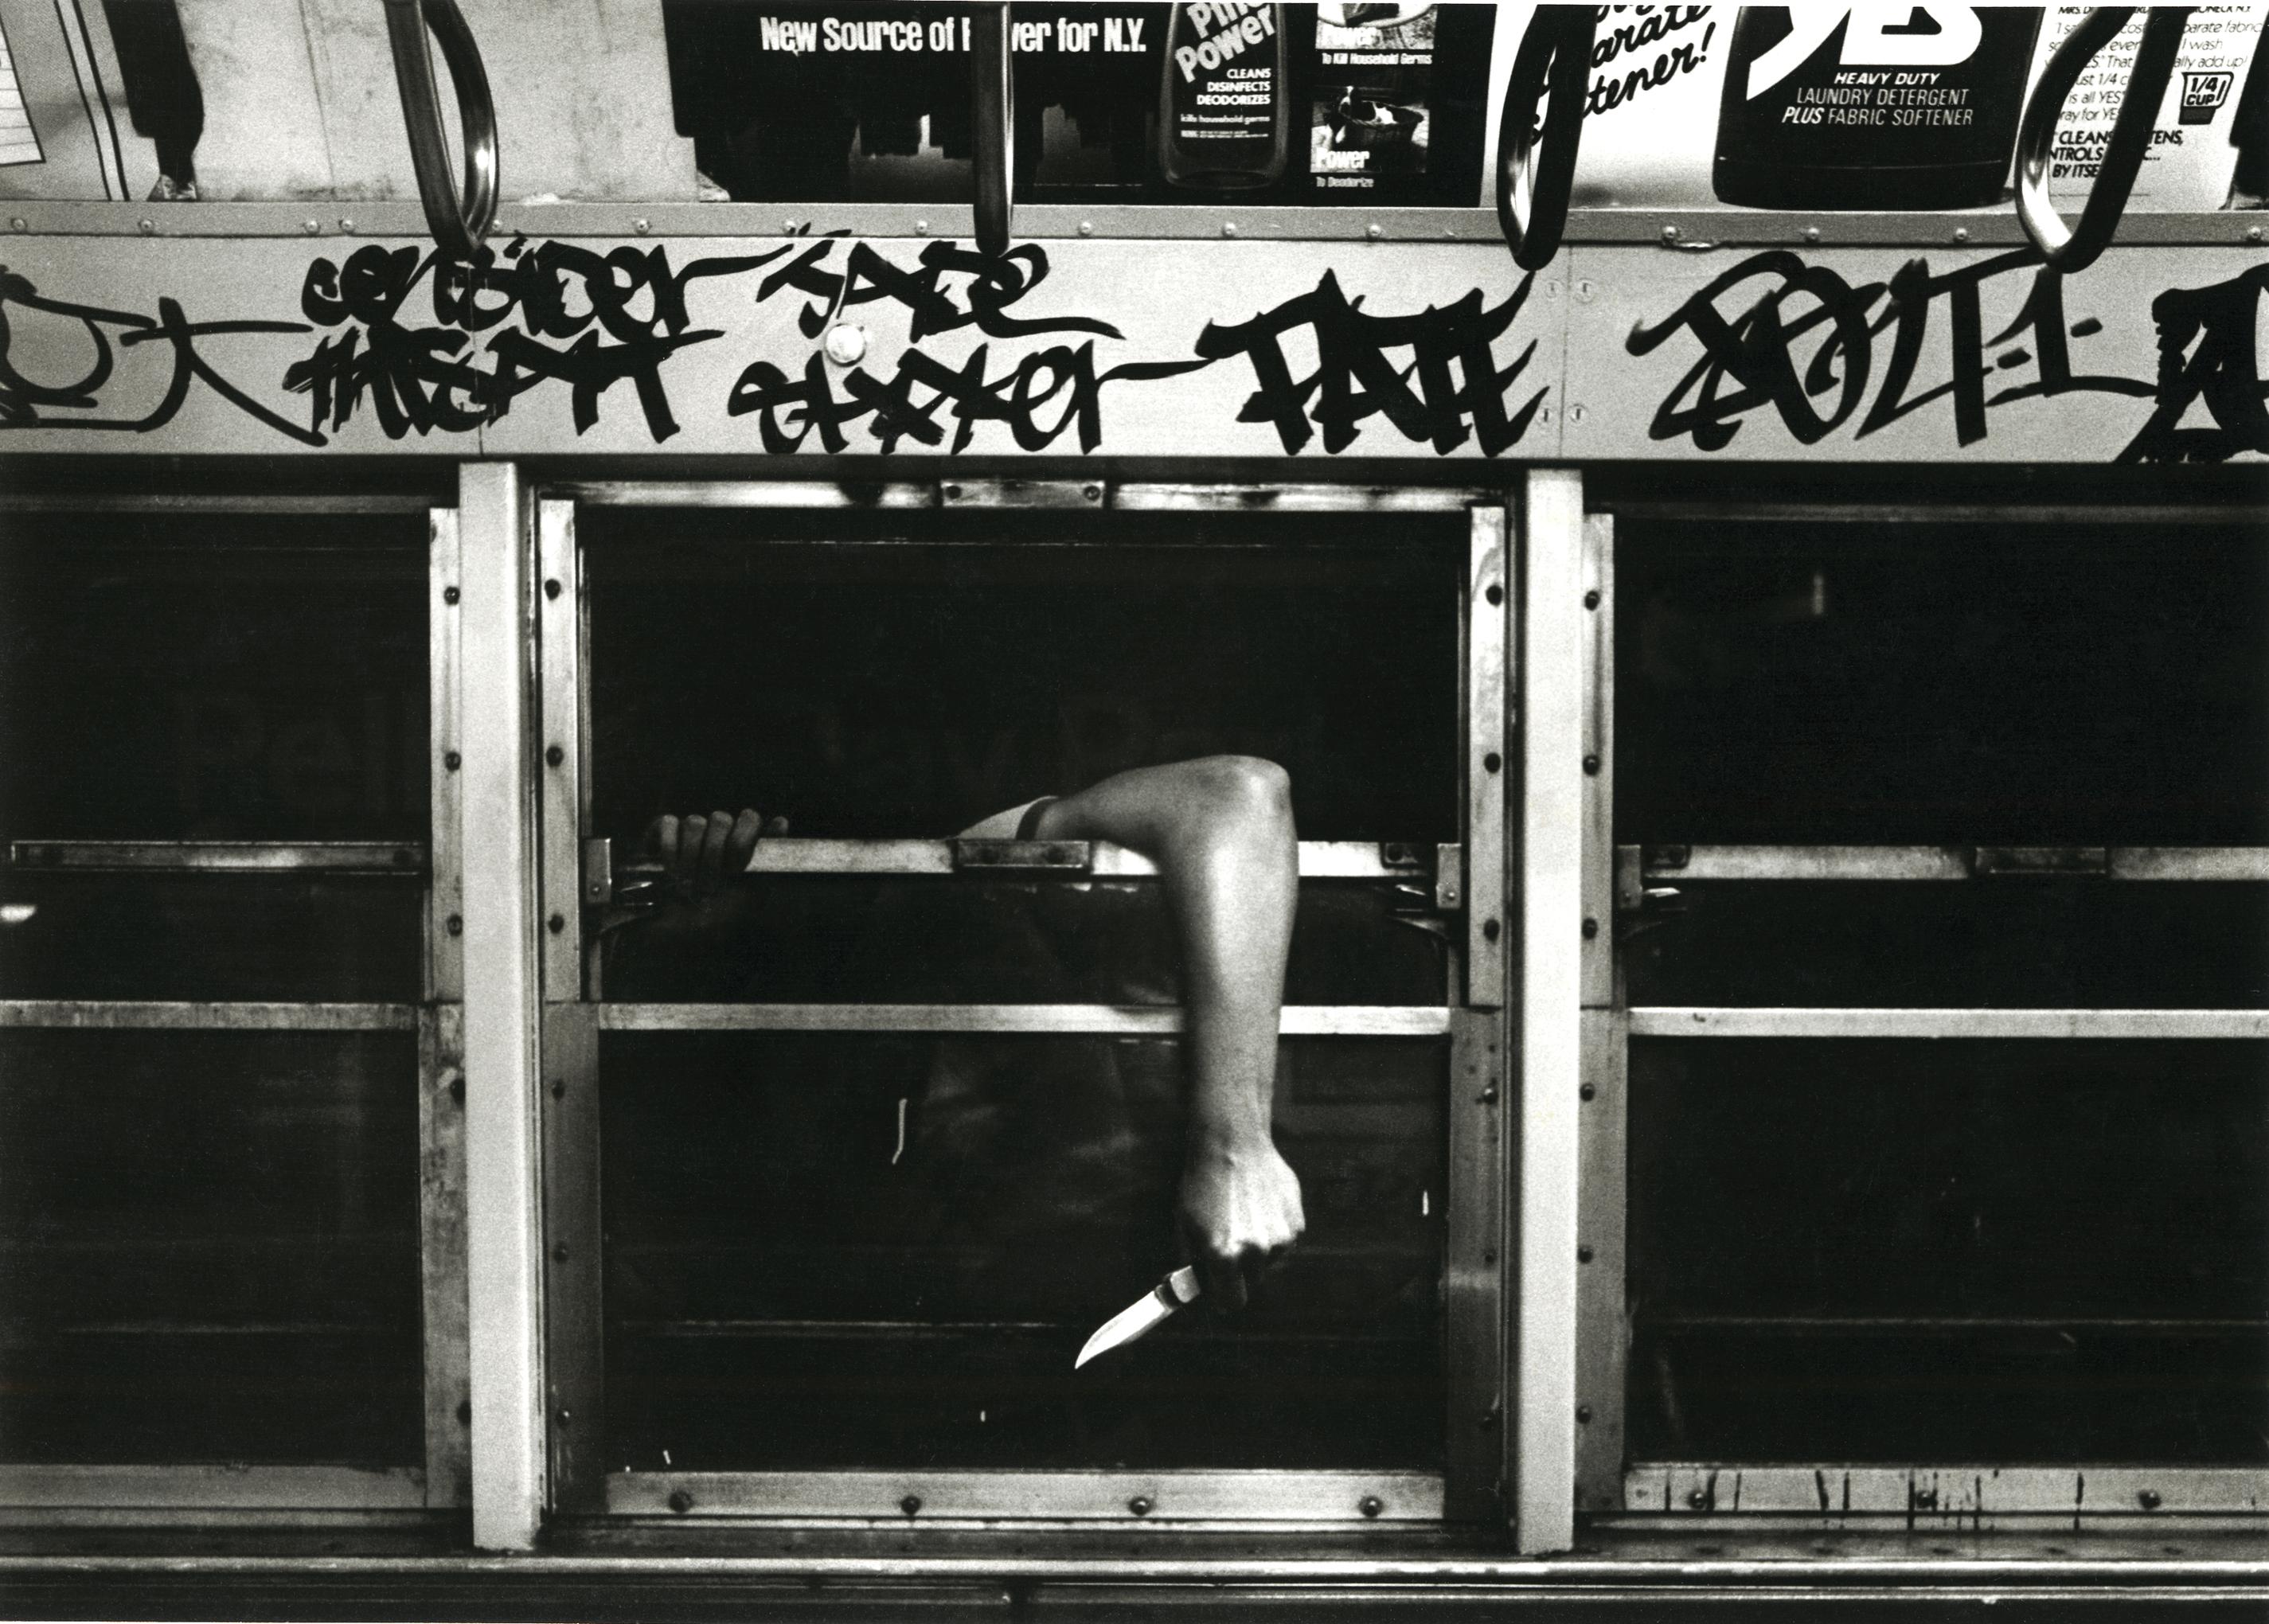 John Conn Figurative Photograph - Subway 37, Black & White, Limited Edition Photograph, NYC, 1981, Unframed, Knife